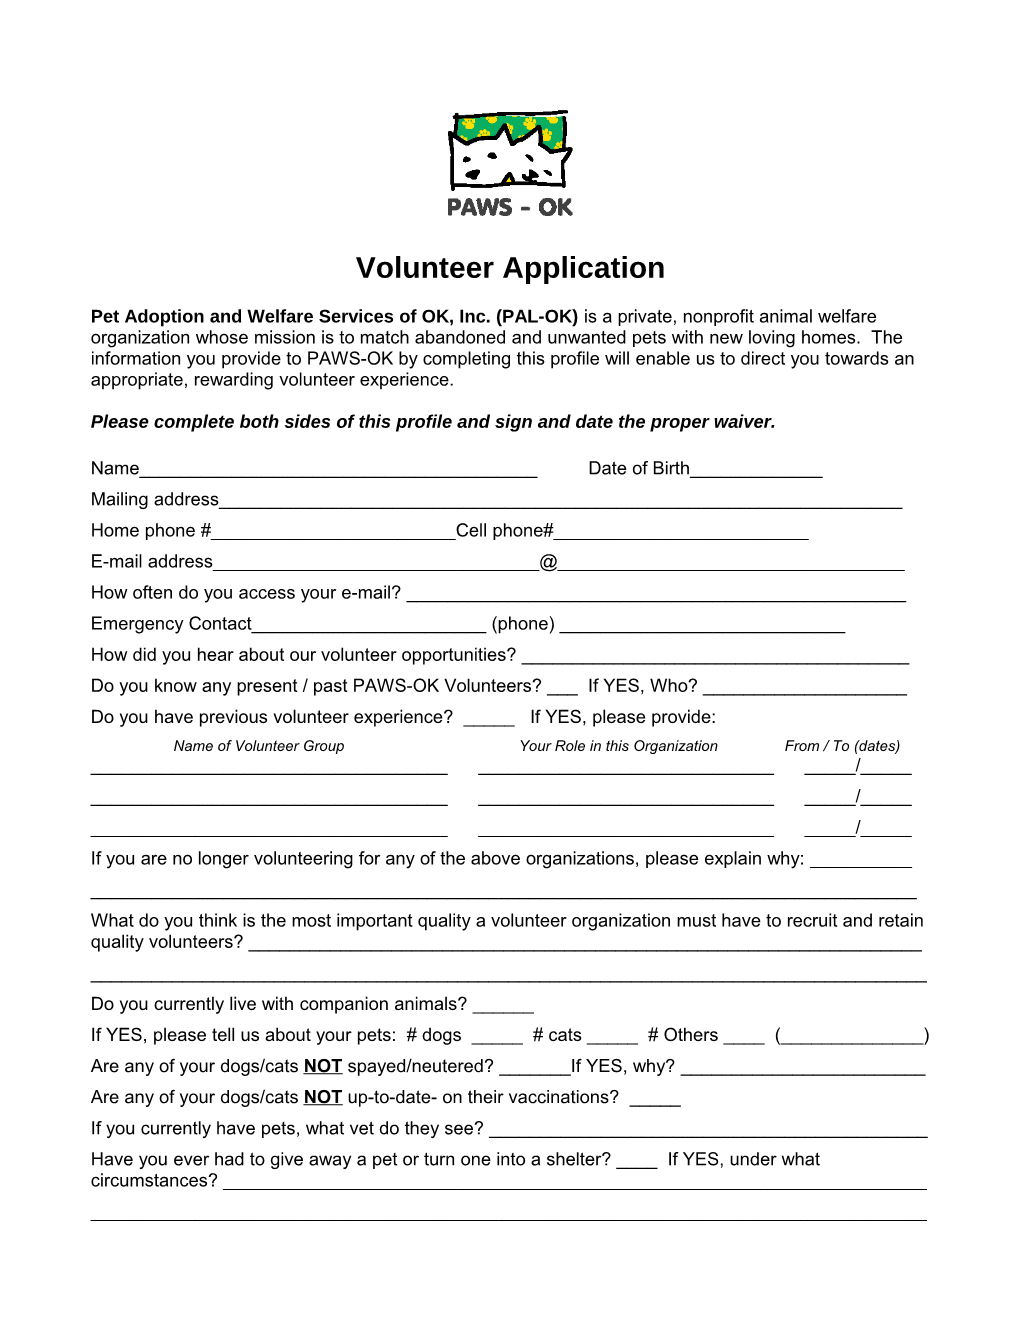 Volunteer Application s5